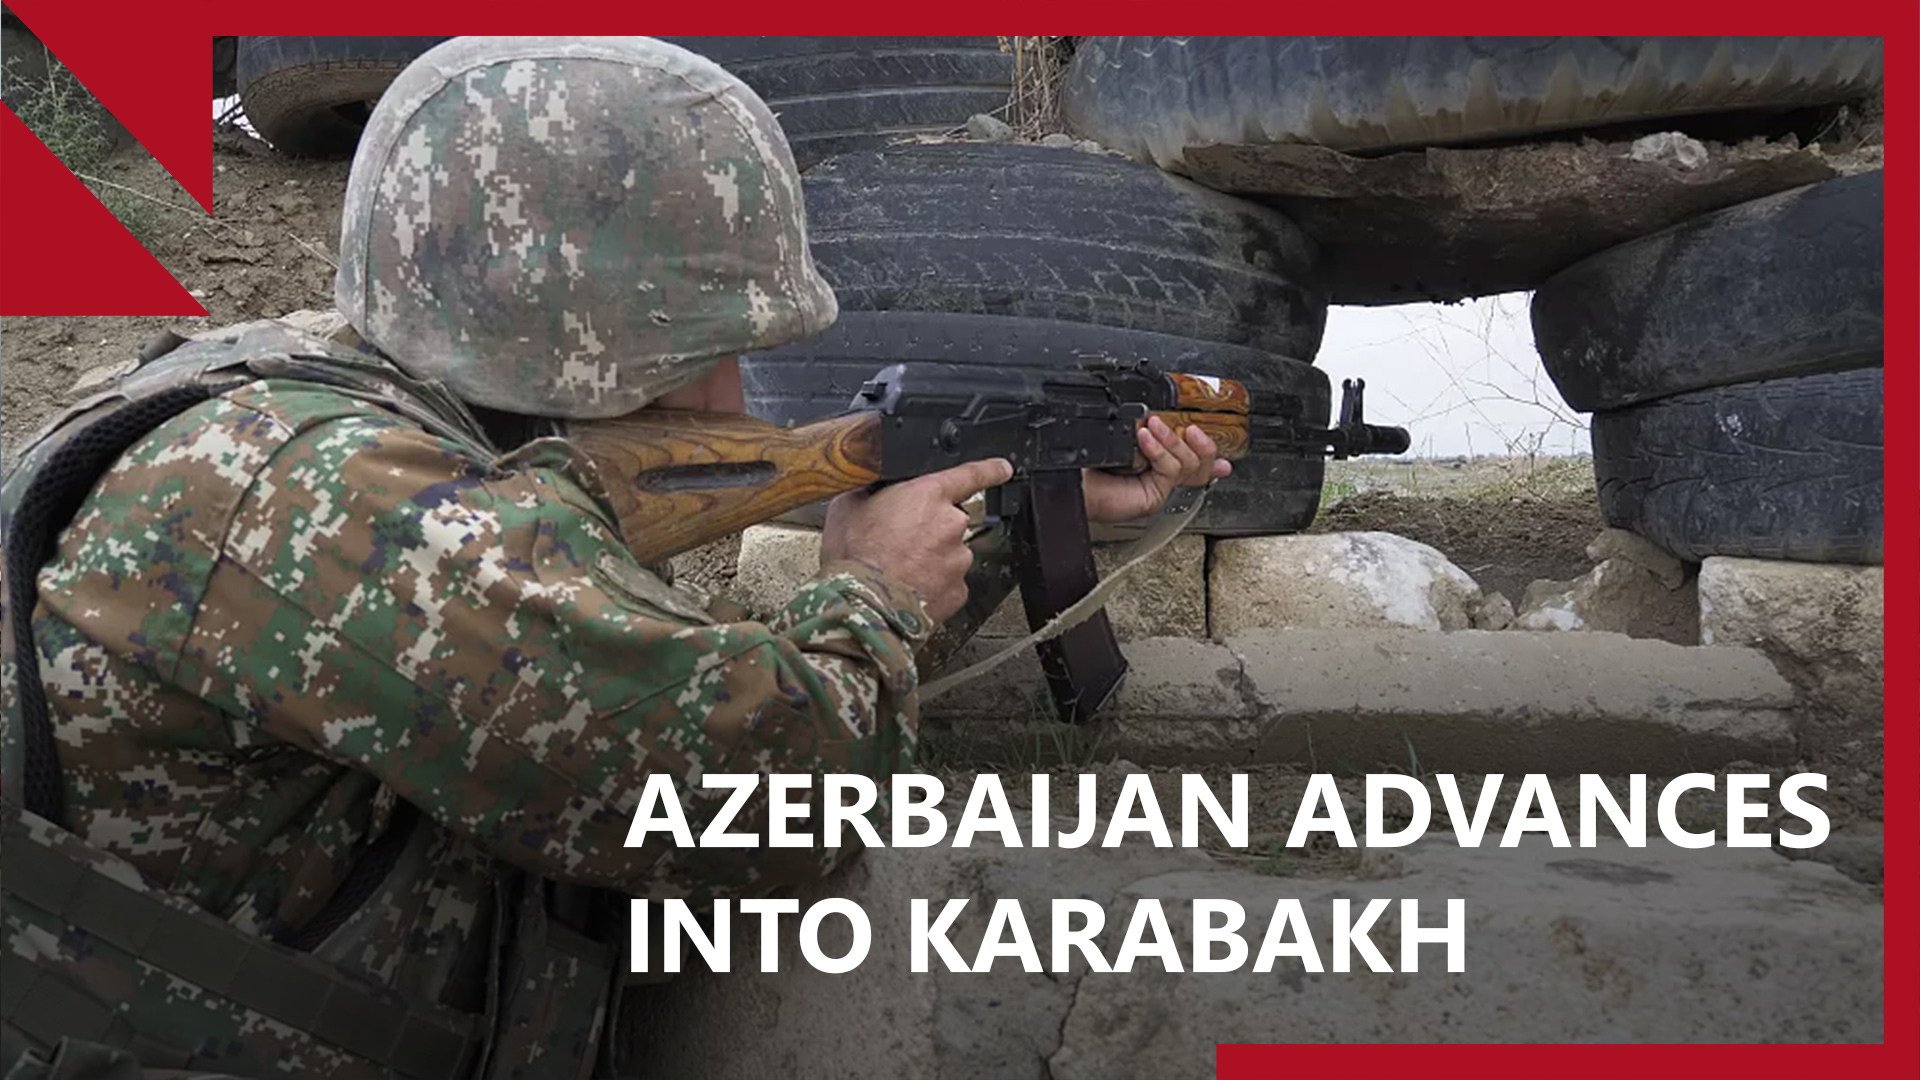 Azerbaijan again advances troops in Karabakh, spelling fears of renewed conflict